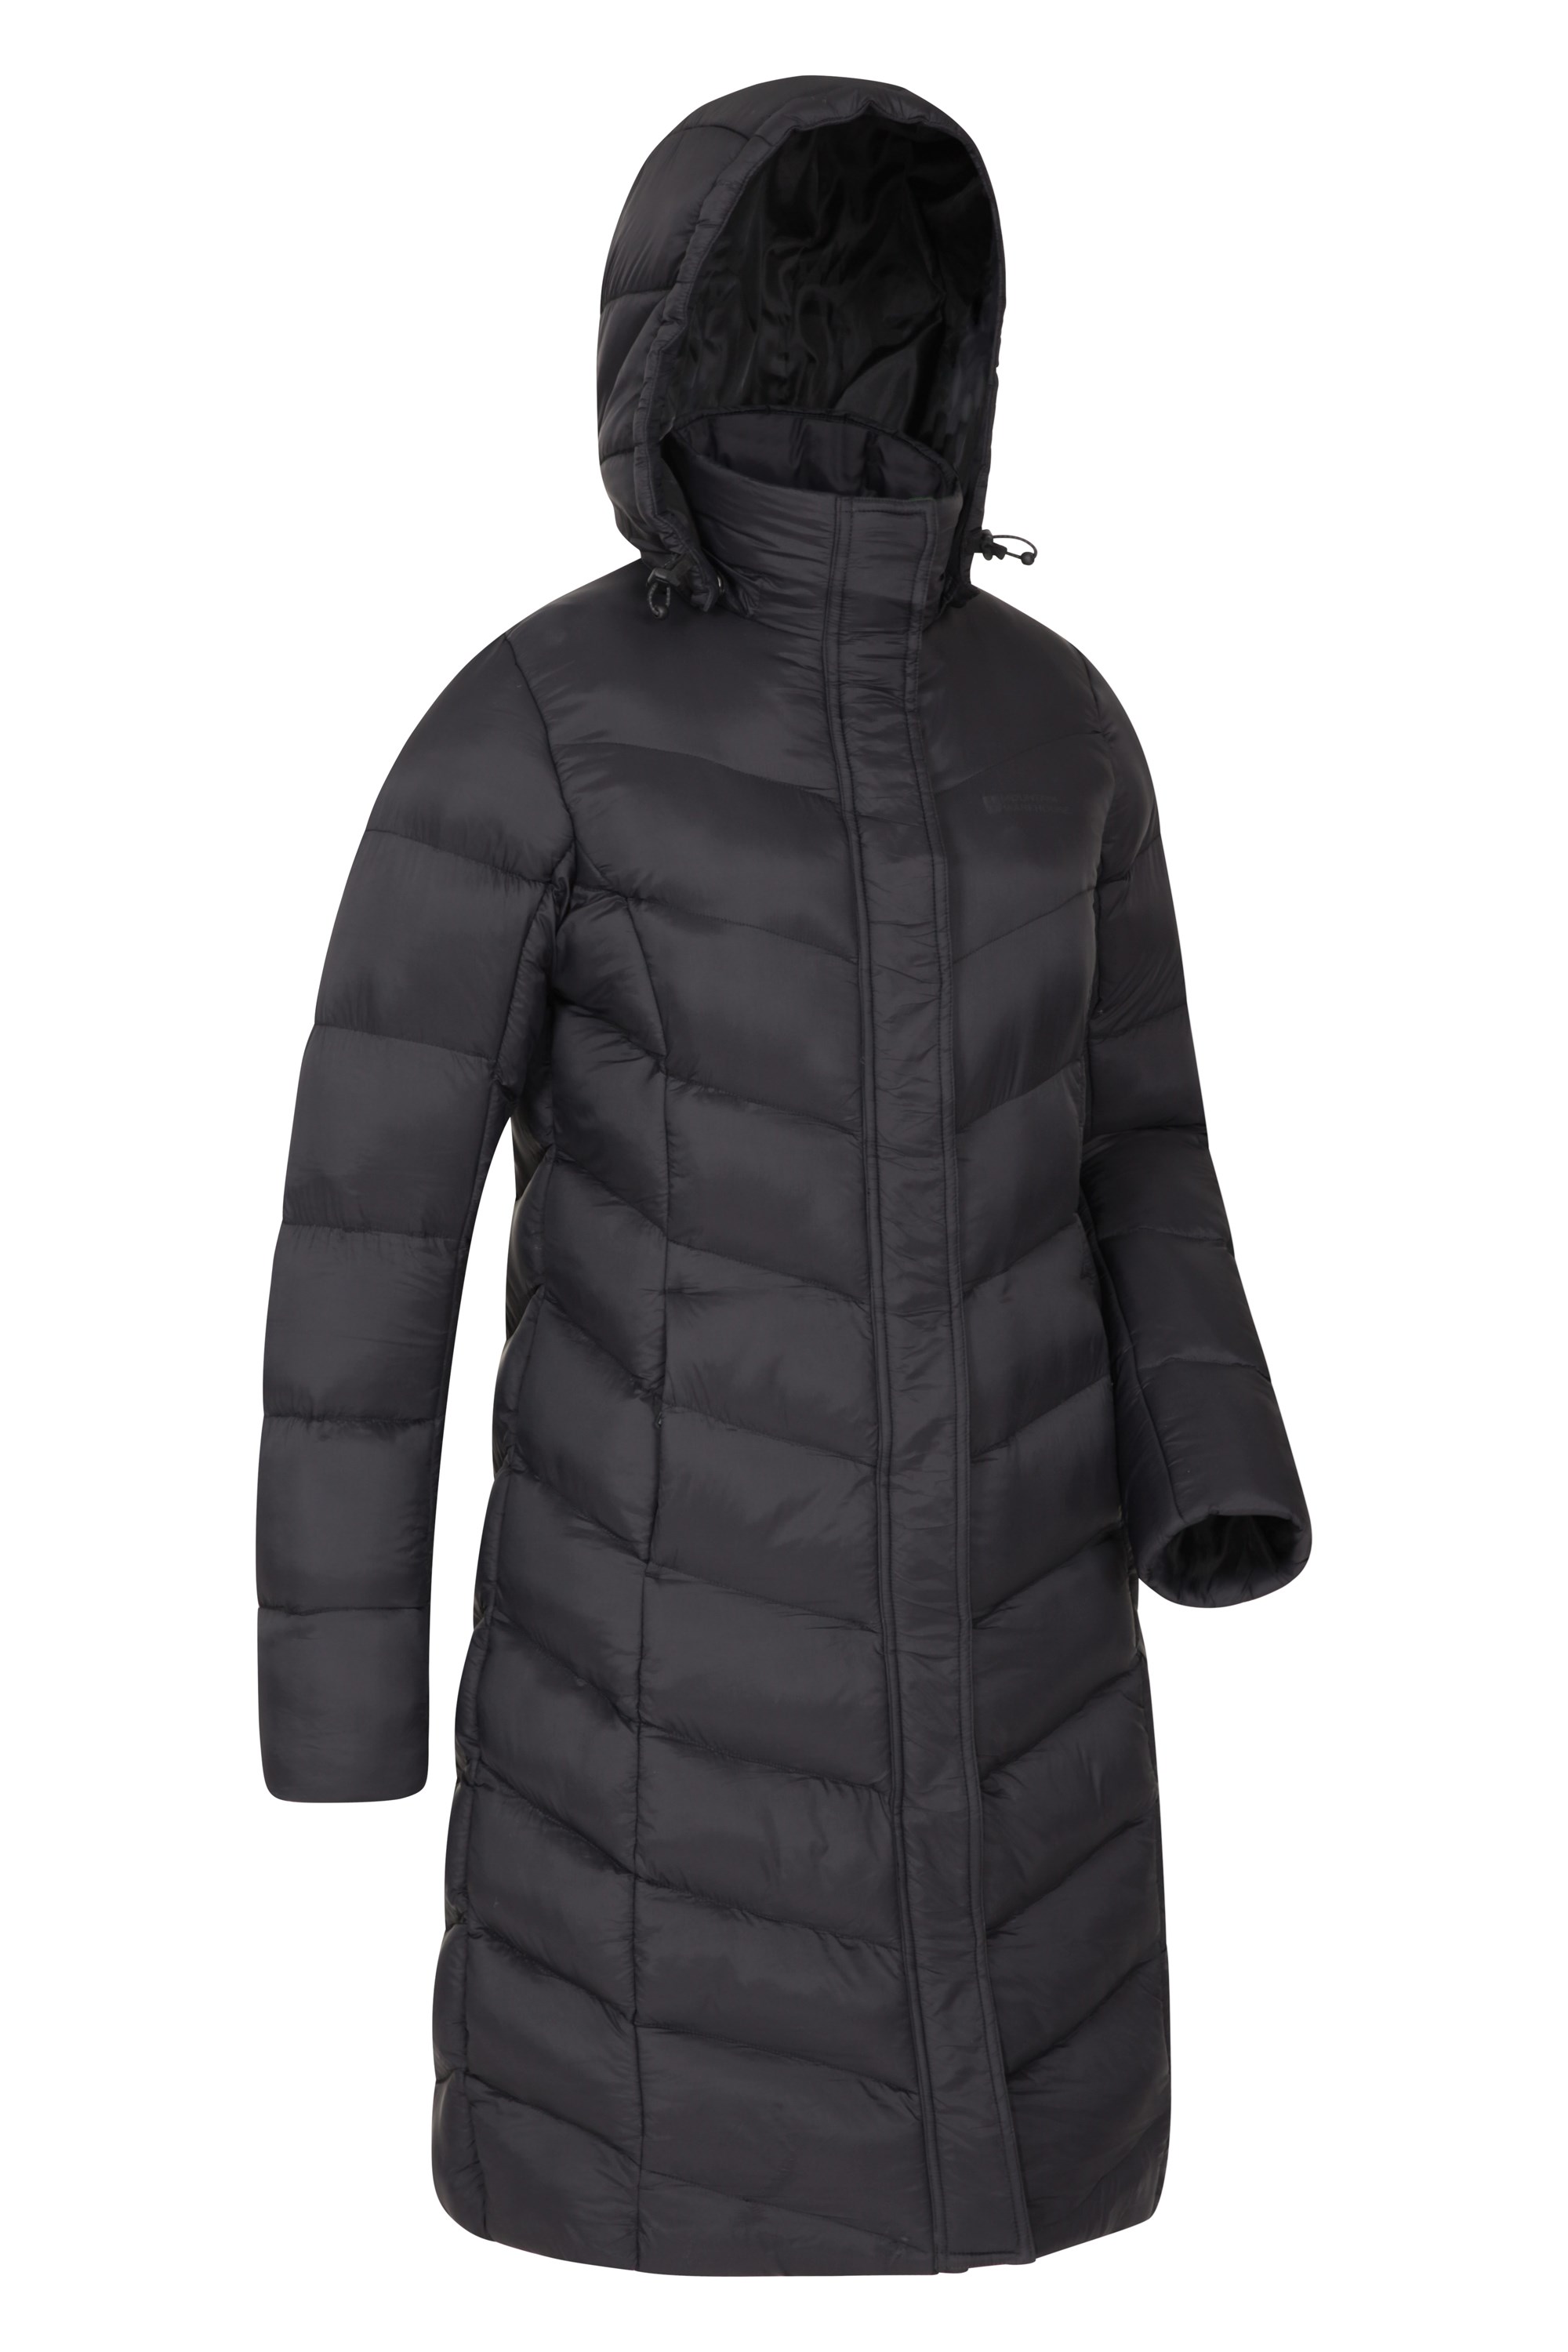 size 18 black coat